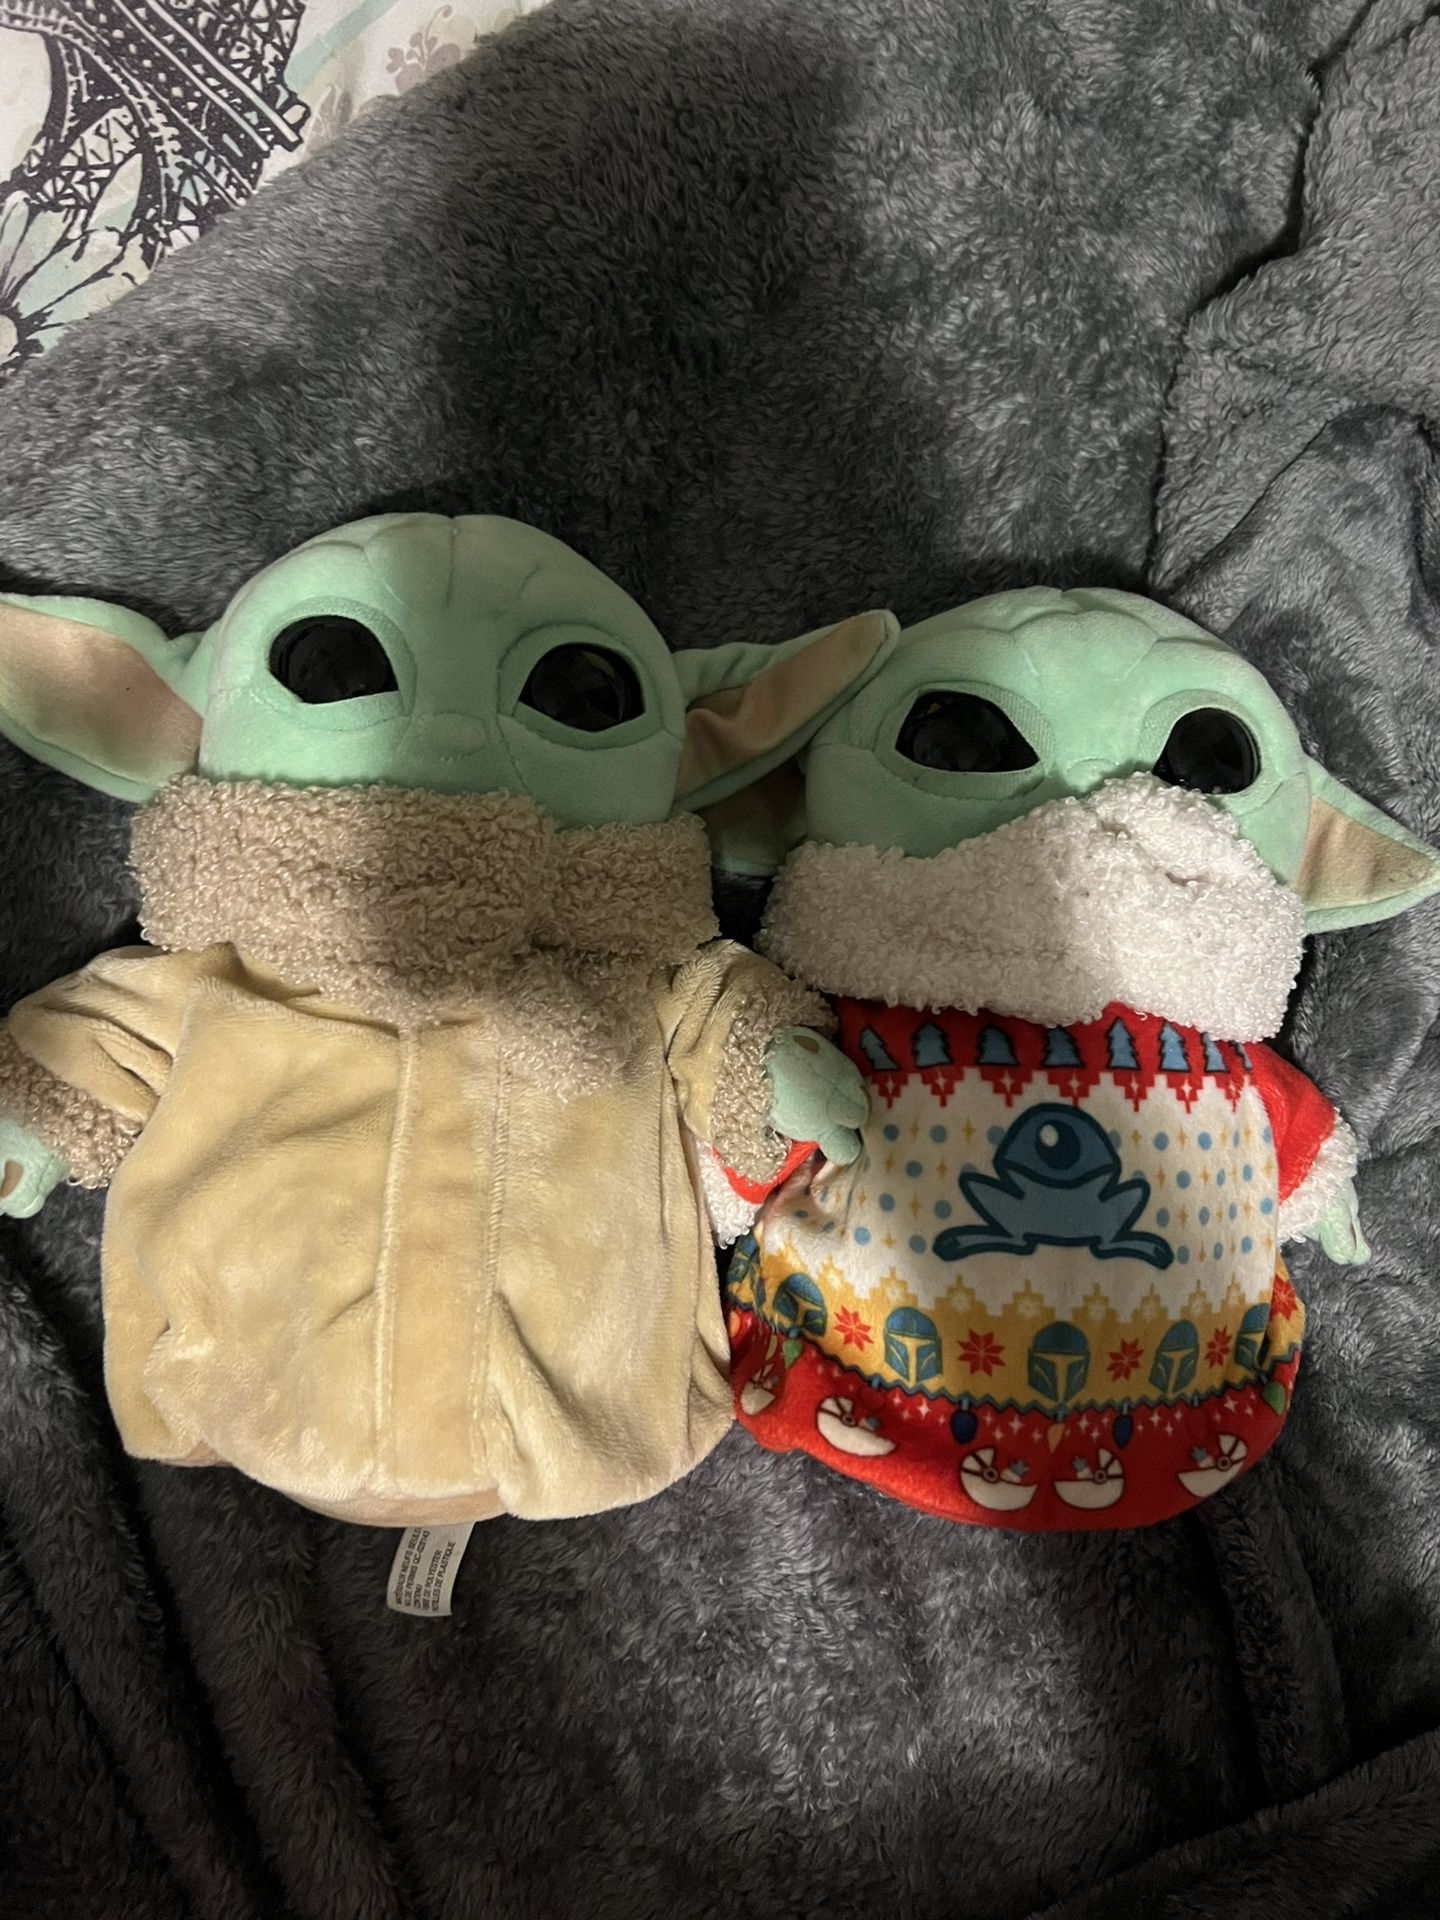 Two Baby Yoda Plushes